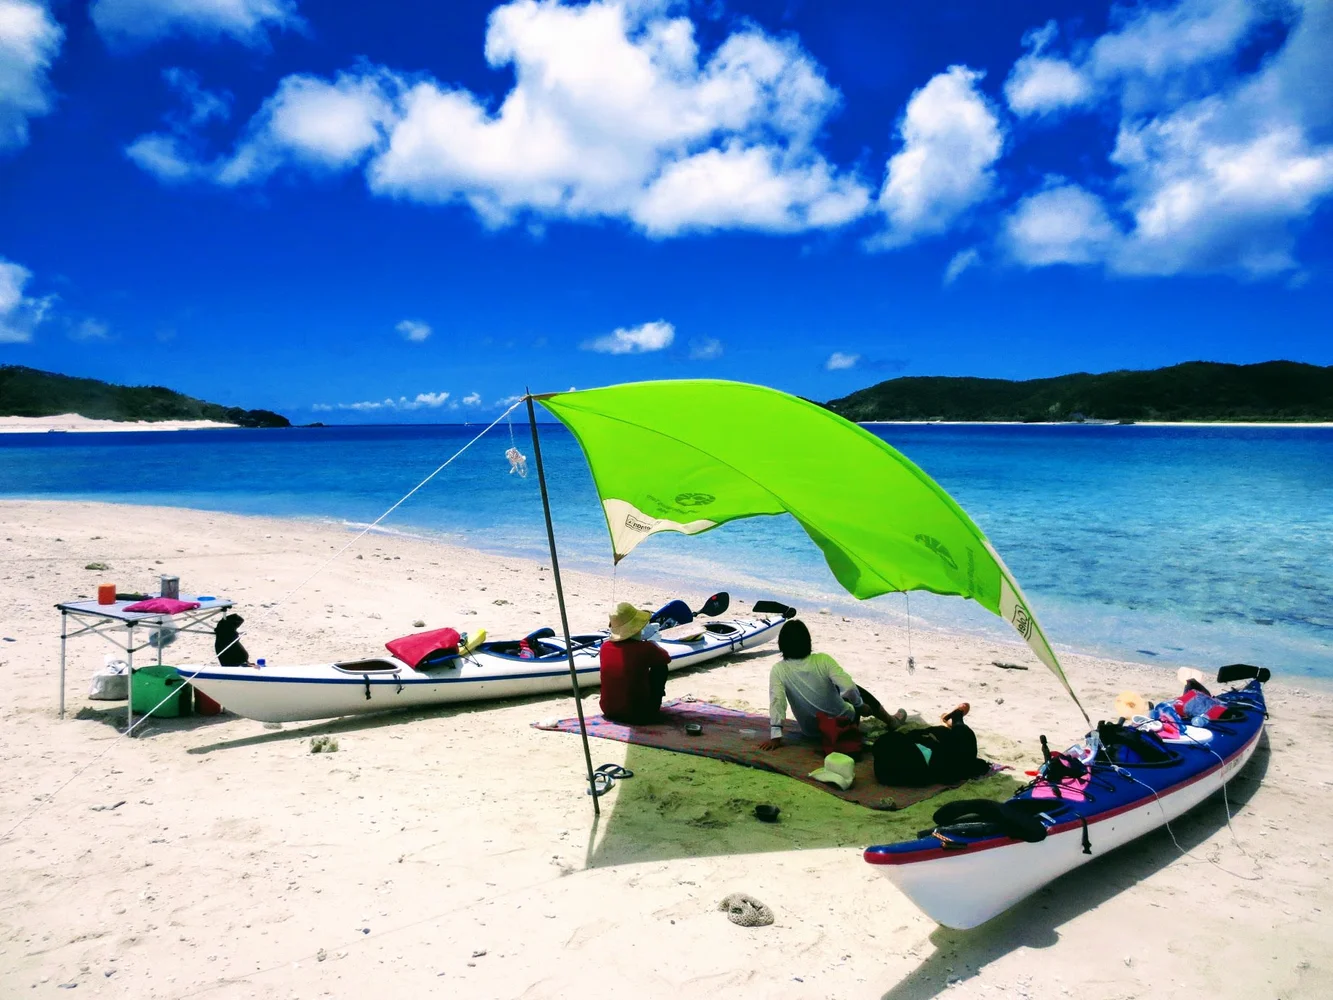 Sea Kayaking and Snorkeling Tour of The Kerama Islands